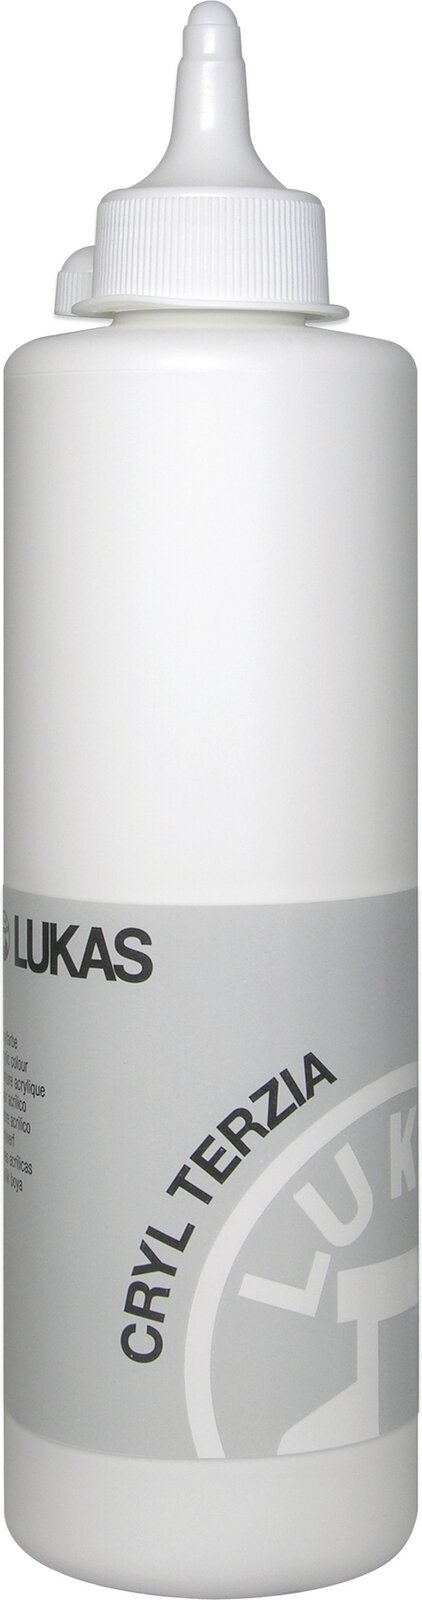 Acrylfarbe Lukas Cryl Terzia Acrylic Paint Plastic Bottle Acrylfarbe Titanium White 500 ml 1 Stck